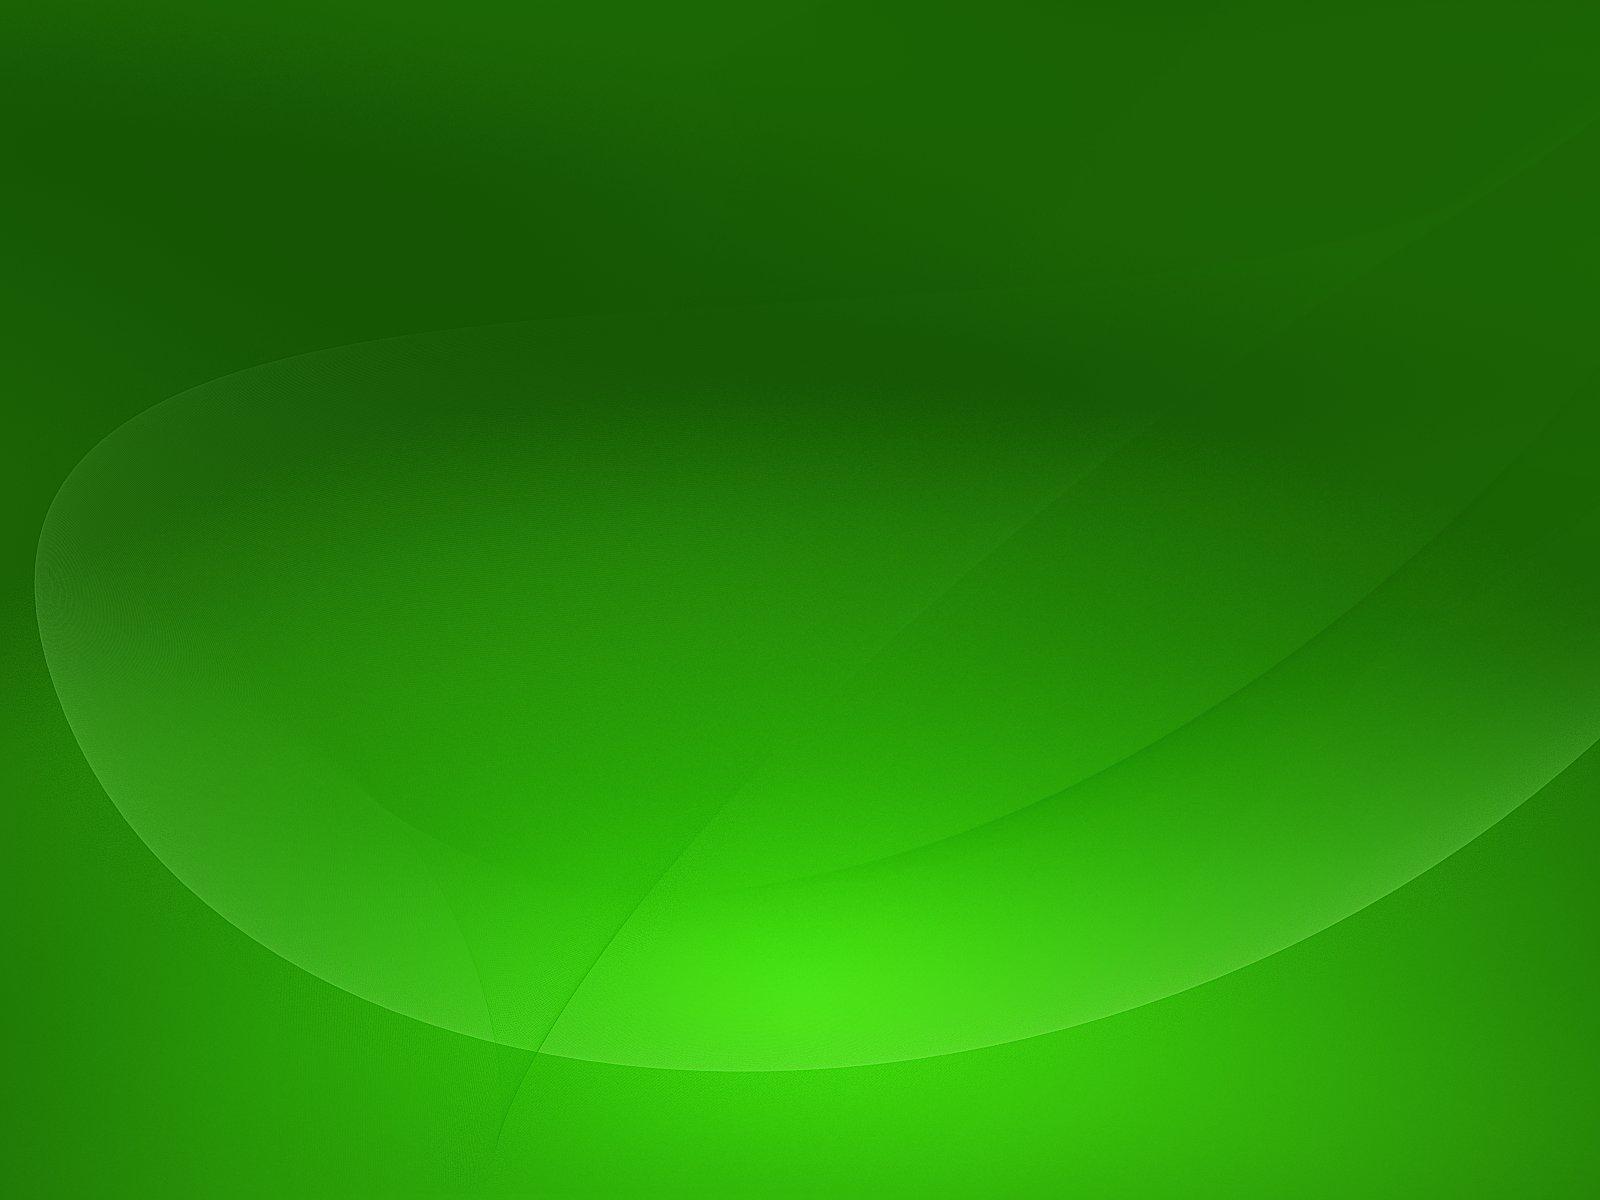 Plain Green Backgrounds HD Wallpaper, Backgrounds Image